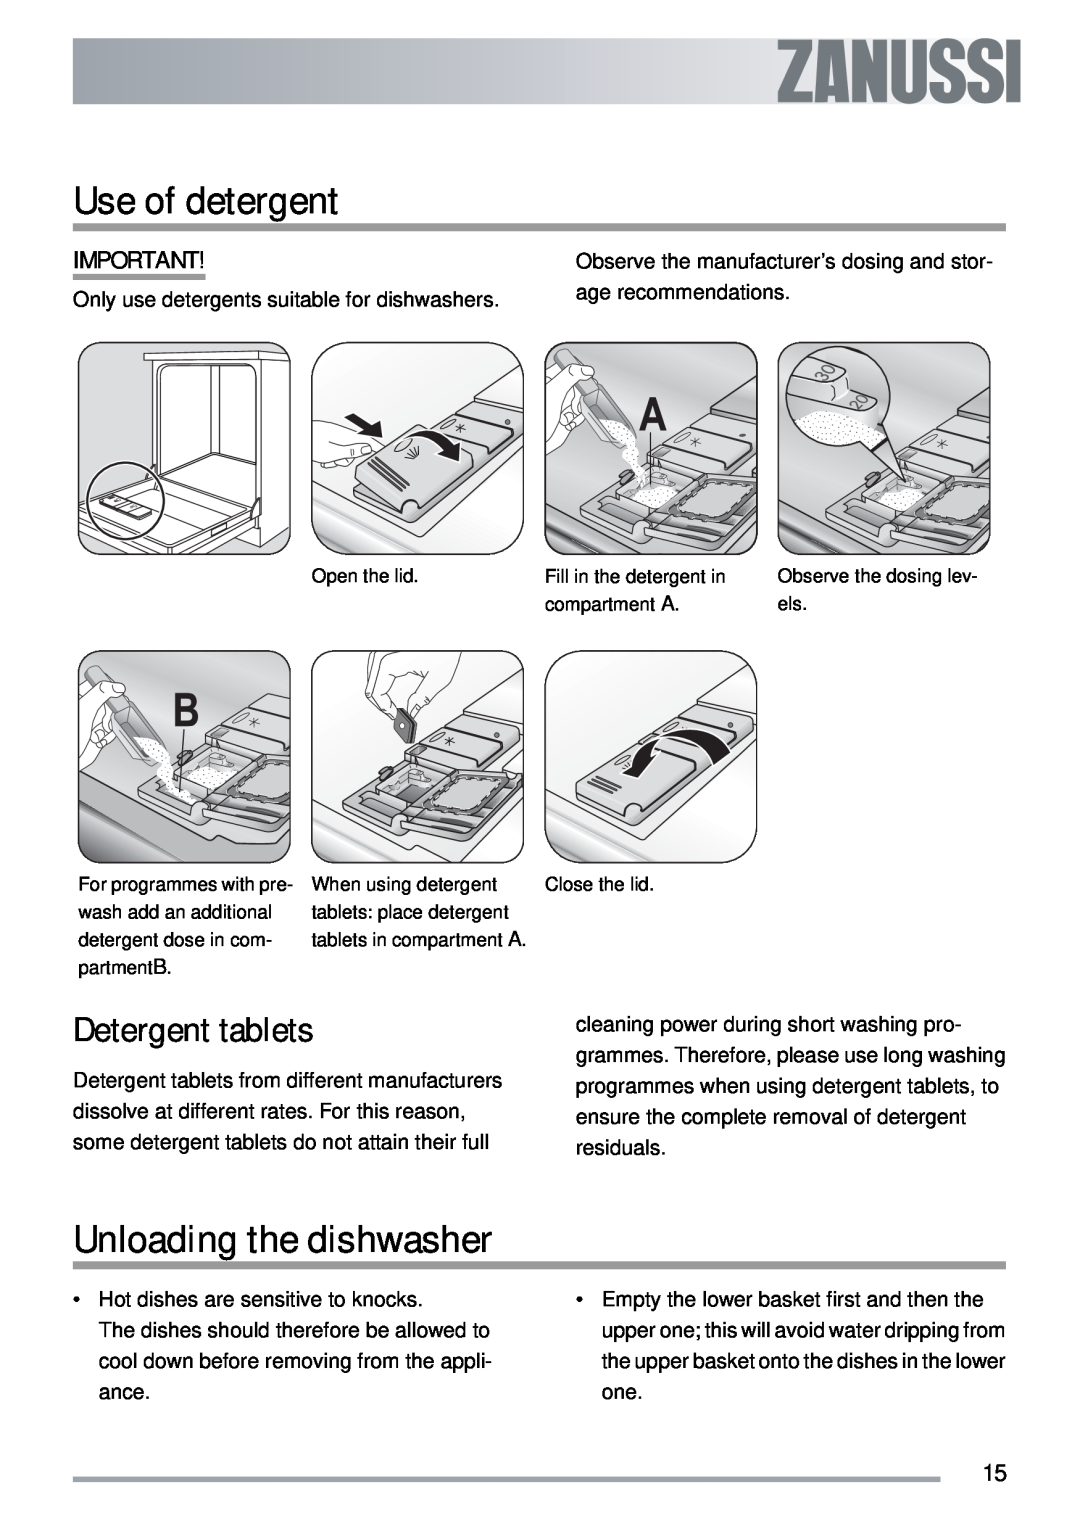 Zanussi ZDT40 user manual Use of detergent, Unloading the dishwasher, Detergent tablets 